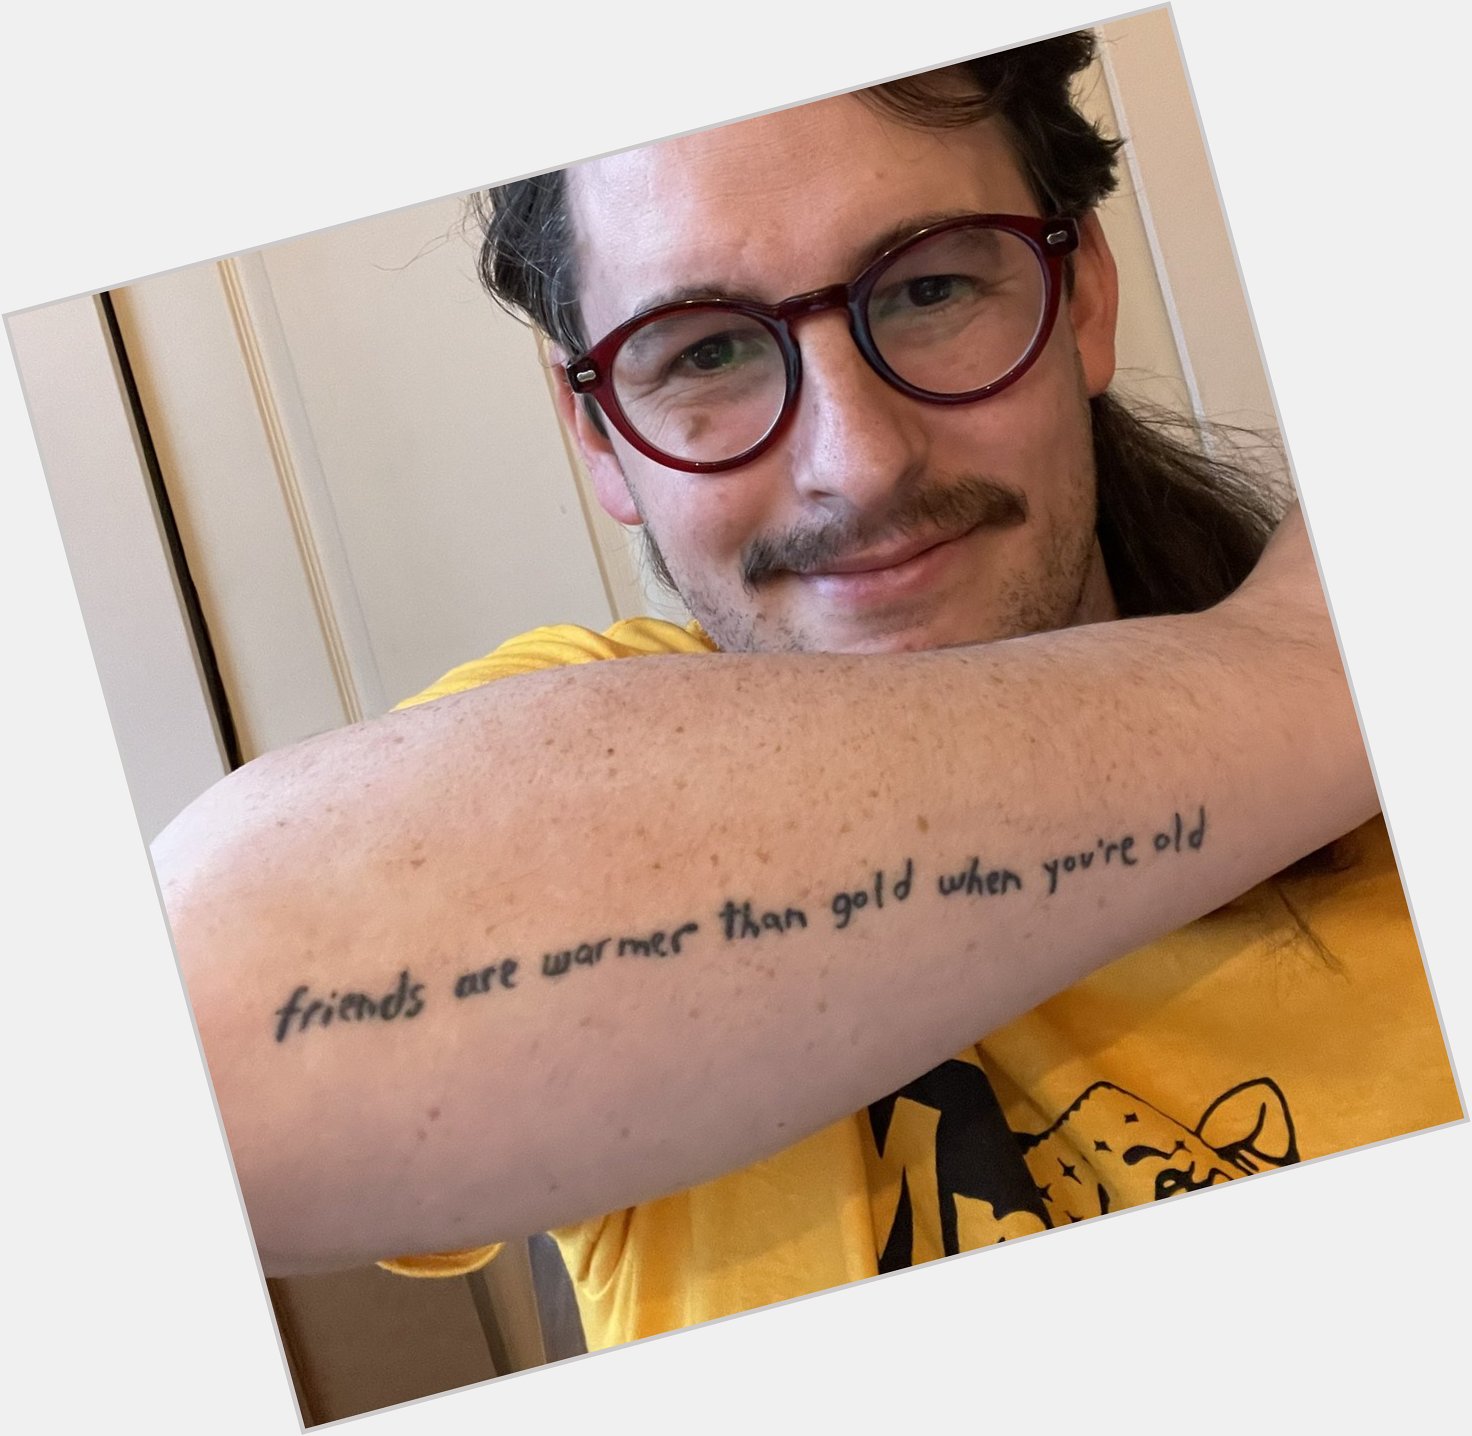 Happy birthday to David Berman! I got these lyrics tattooed on my arm so I never forget them 